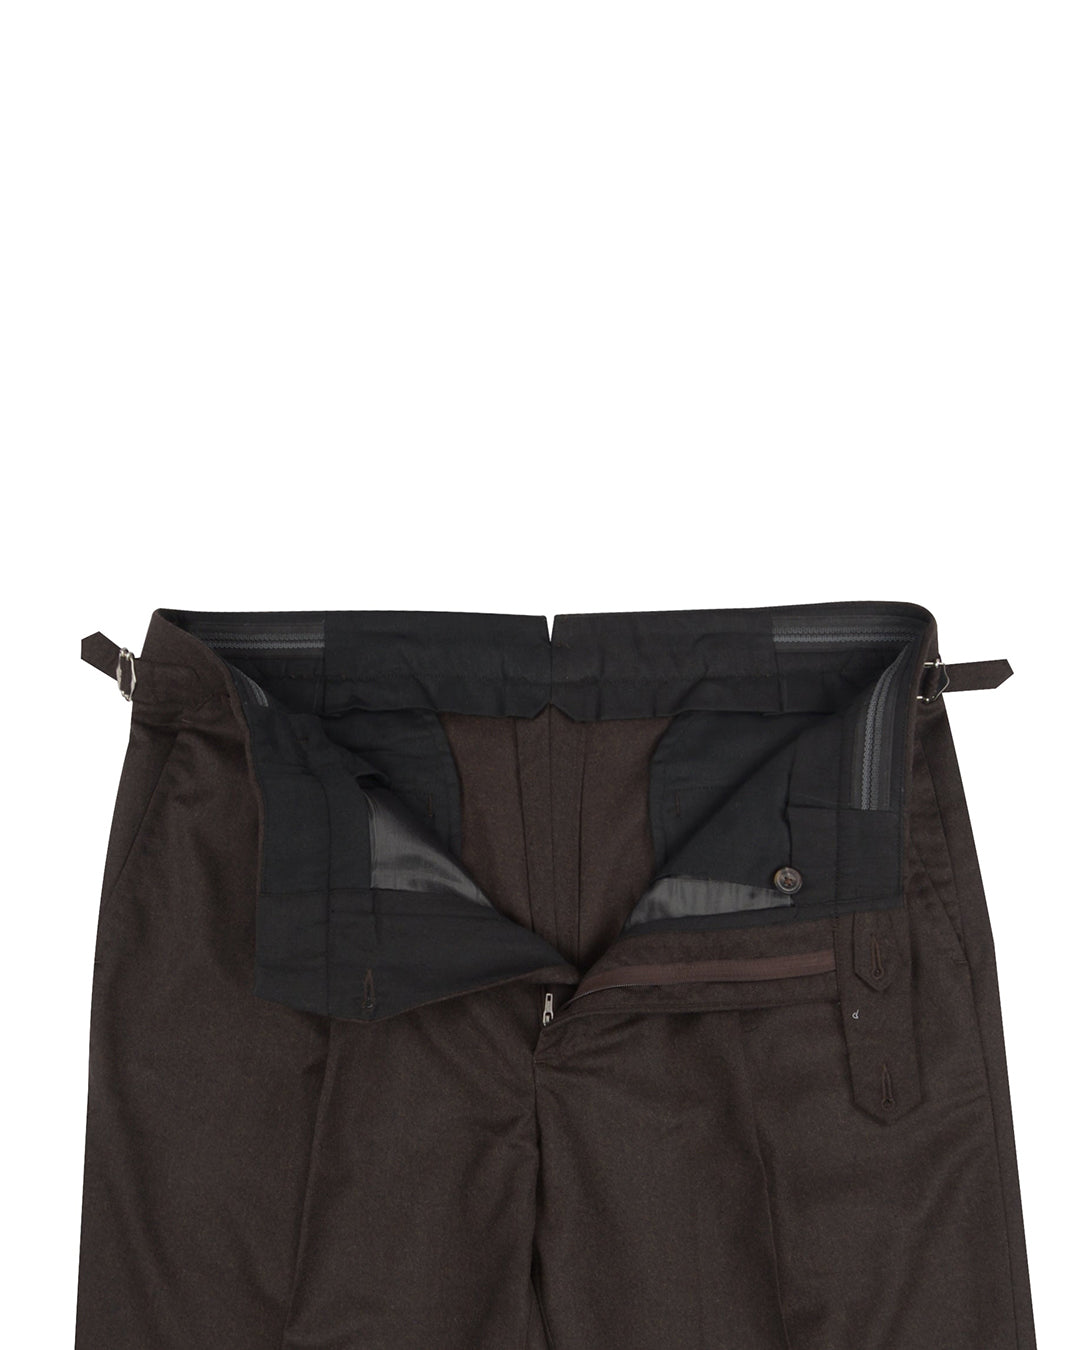 VBC 100% Wool: Dark Chocolate Brown Flannel Dress Pant